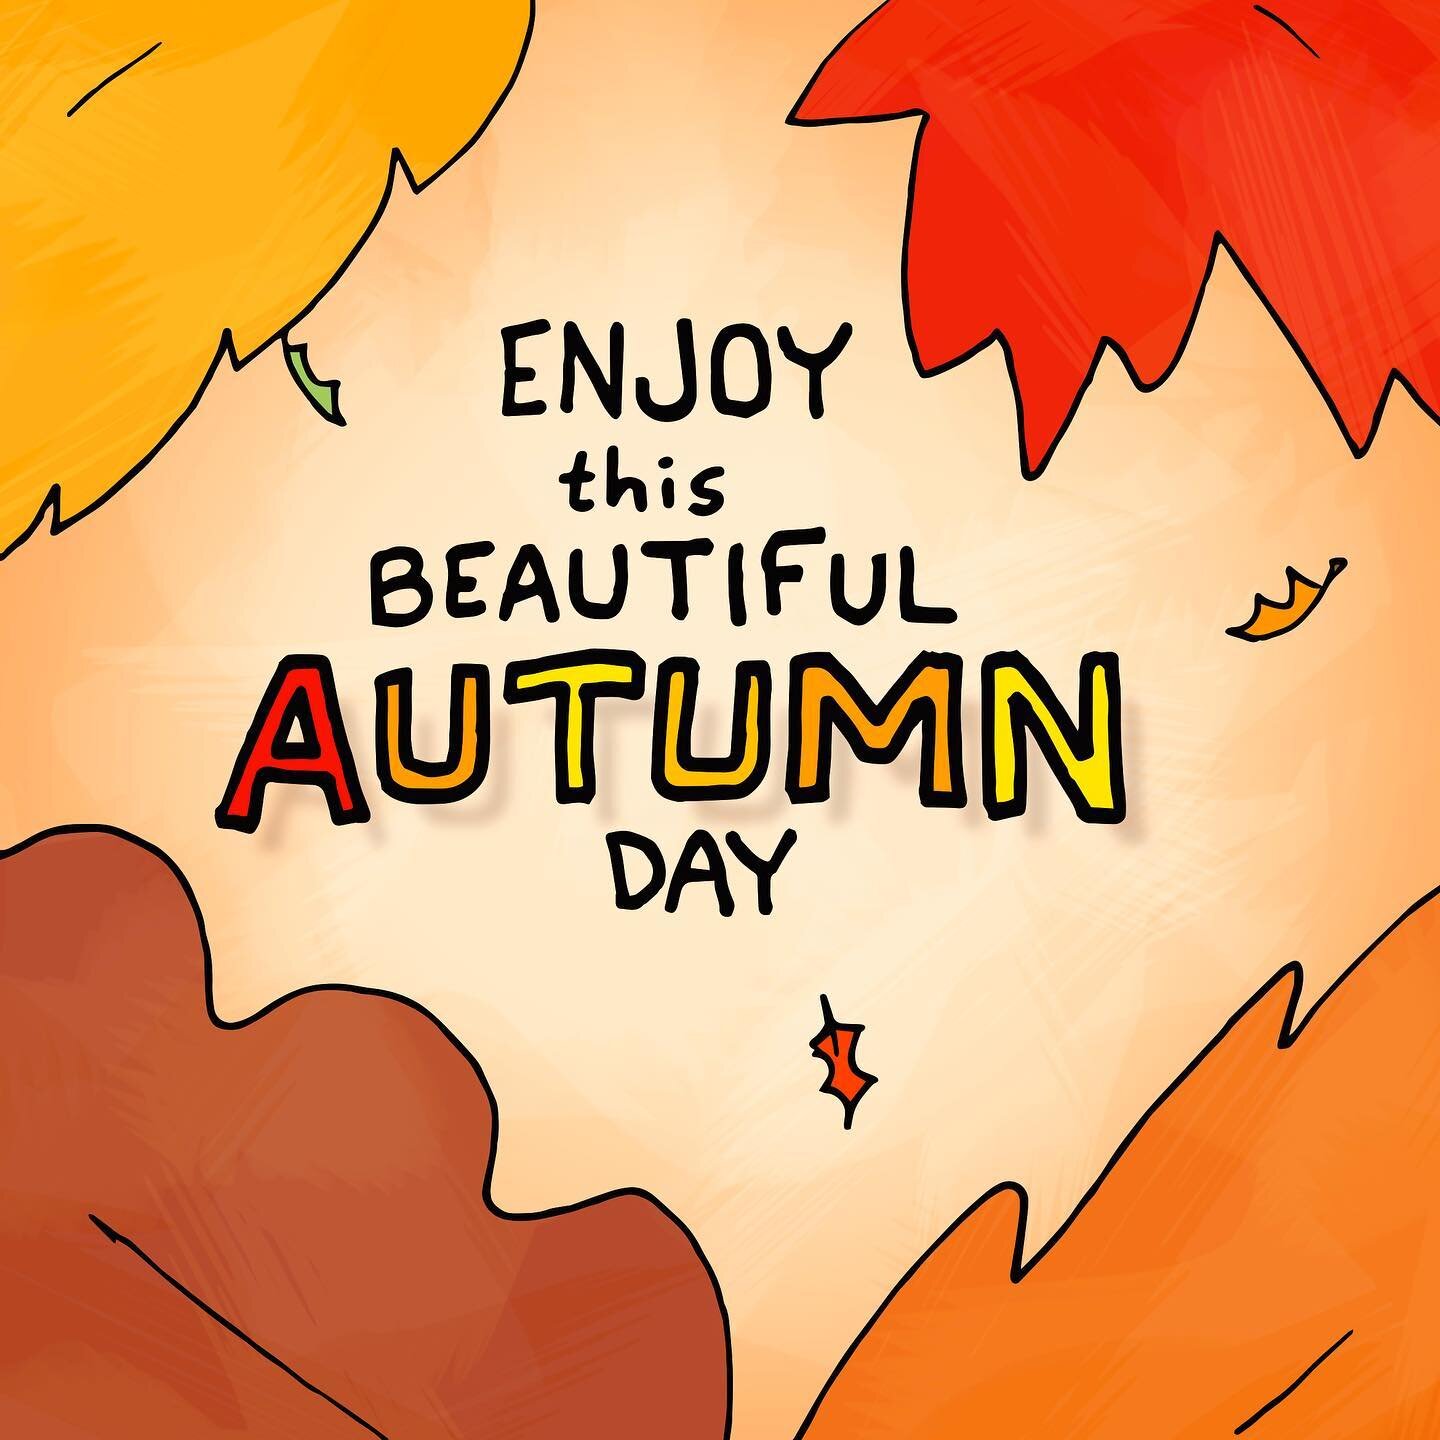 Enjoy this beautiful autumn day! 🍁🍂❤️ 
#Autumn #BeautifulDay #LeavesAreChanging #weather